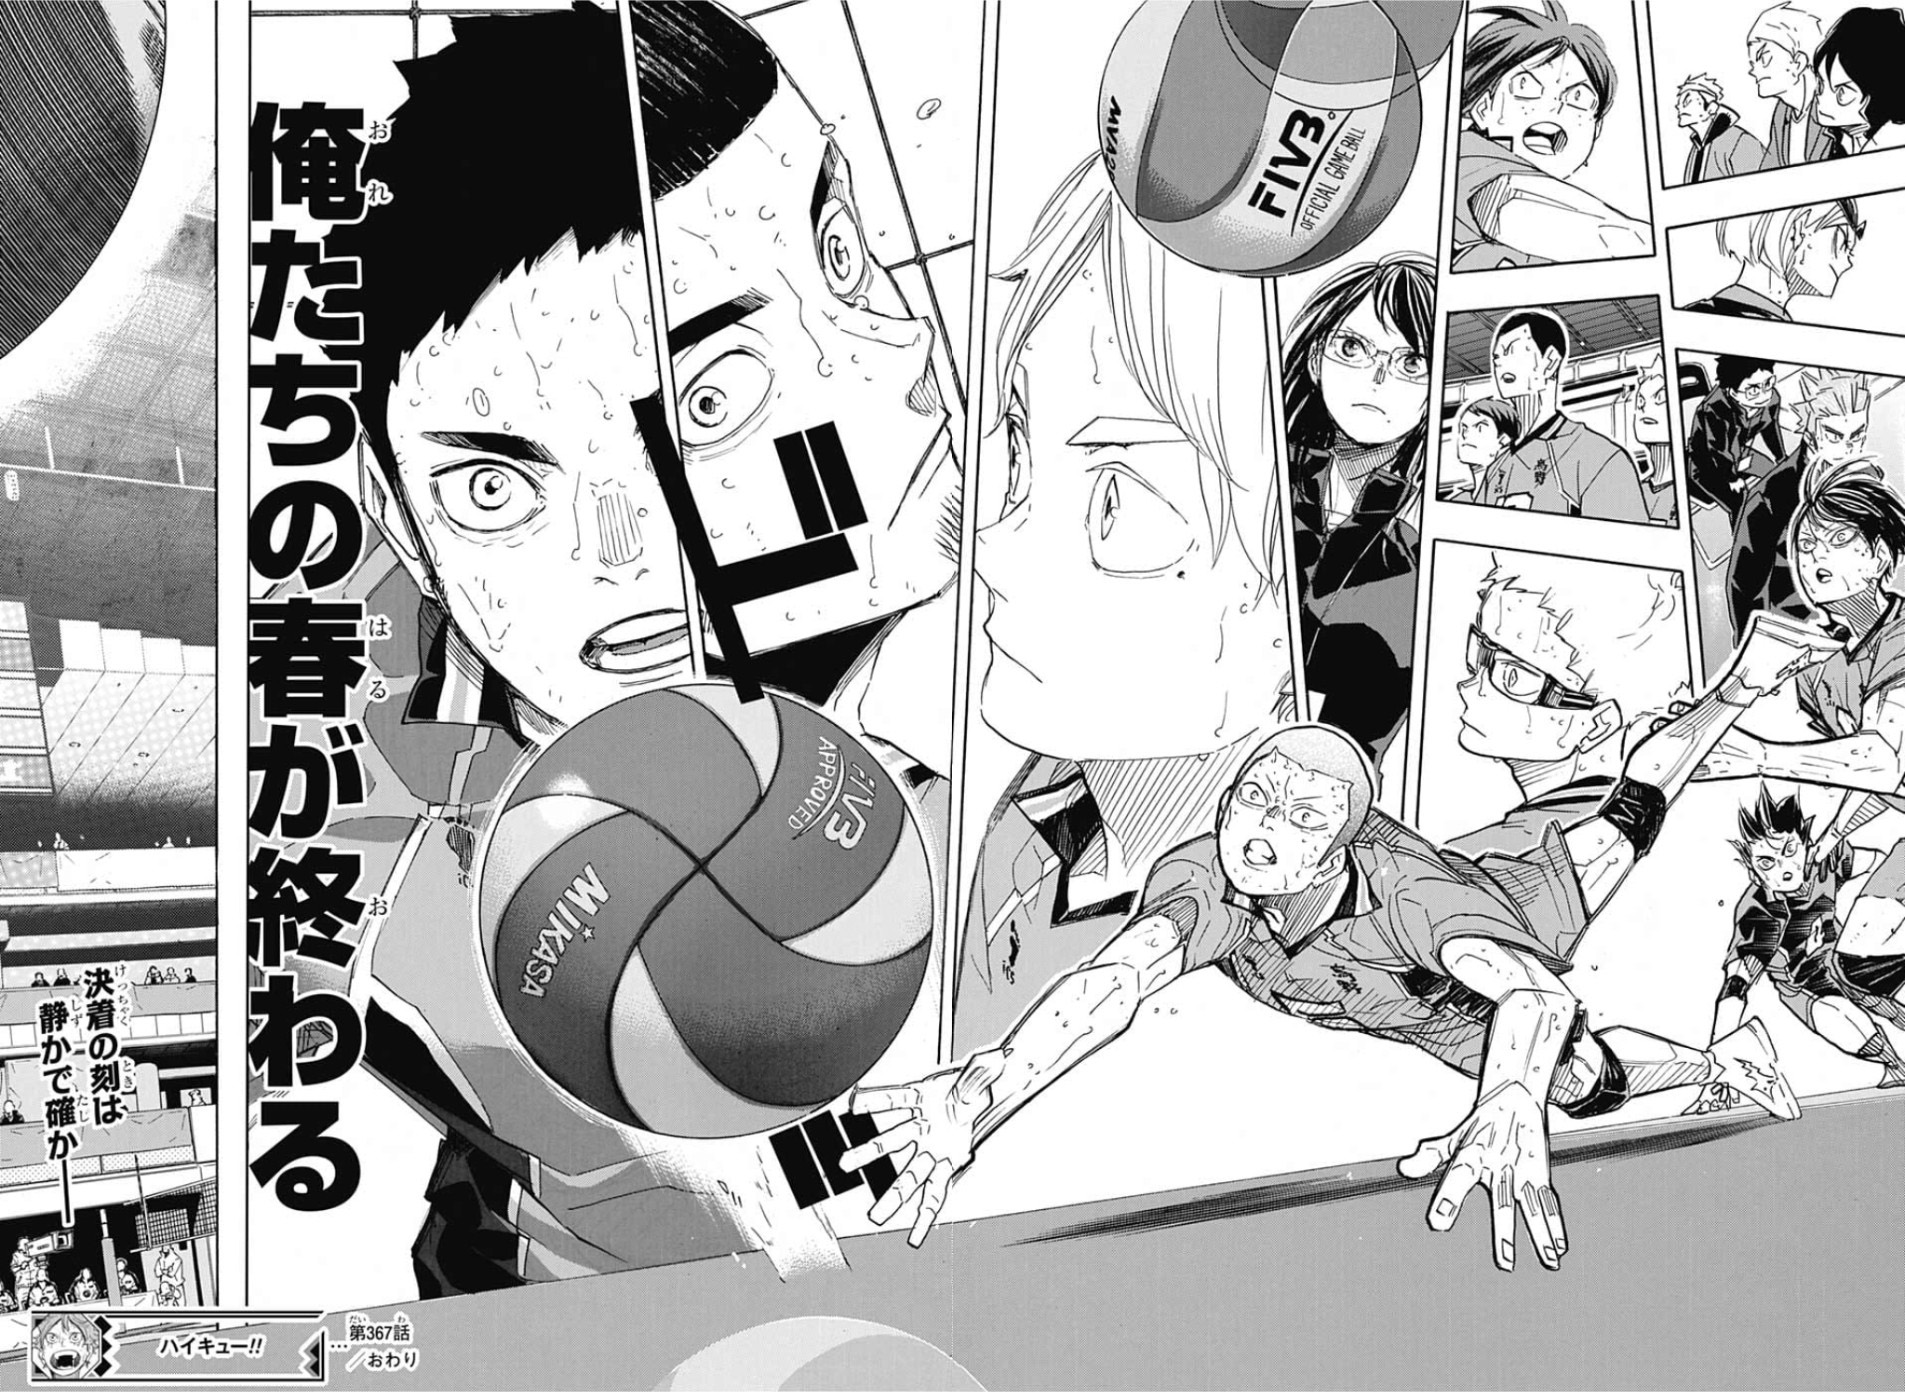 Haikyuu Rumor Suggests the Manga Is Ending This Month